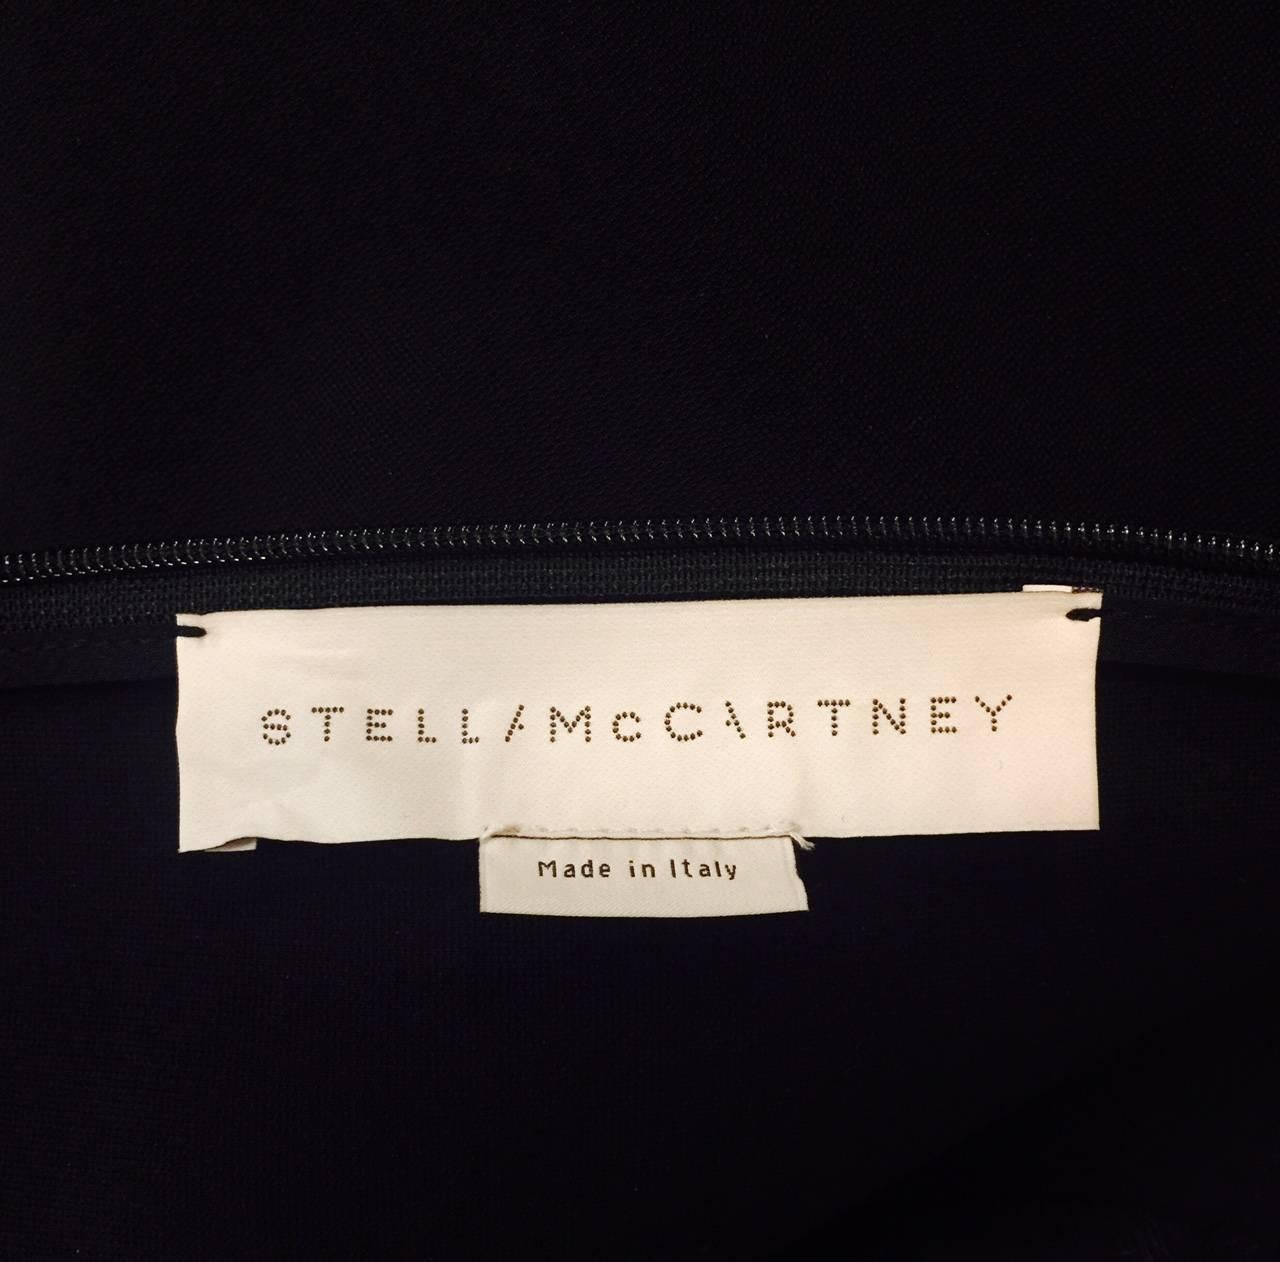 Sensational Stella Mc Cartney Little Black Dress With Decorative Chains at Sides 4